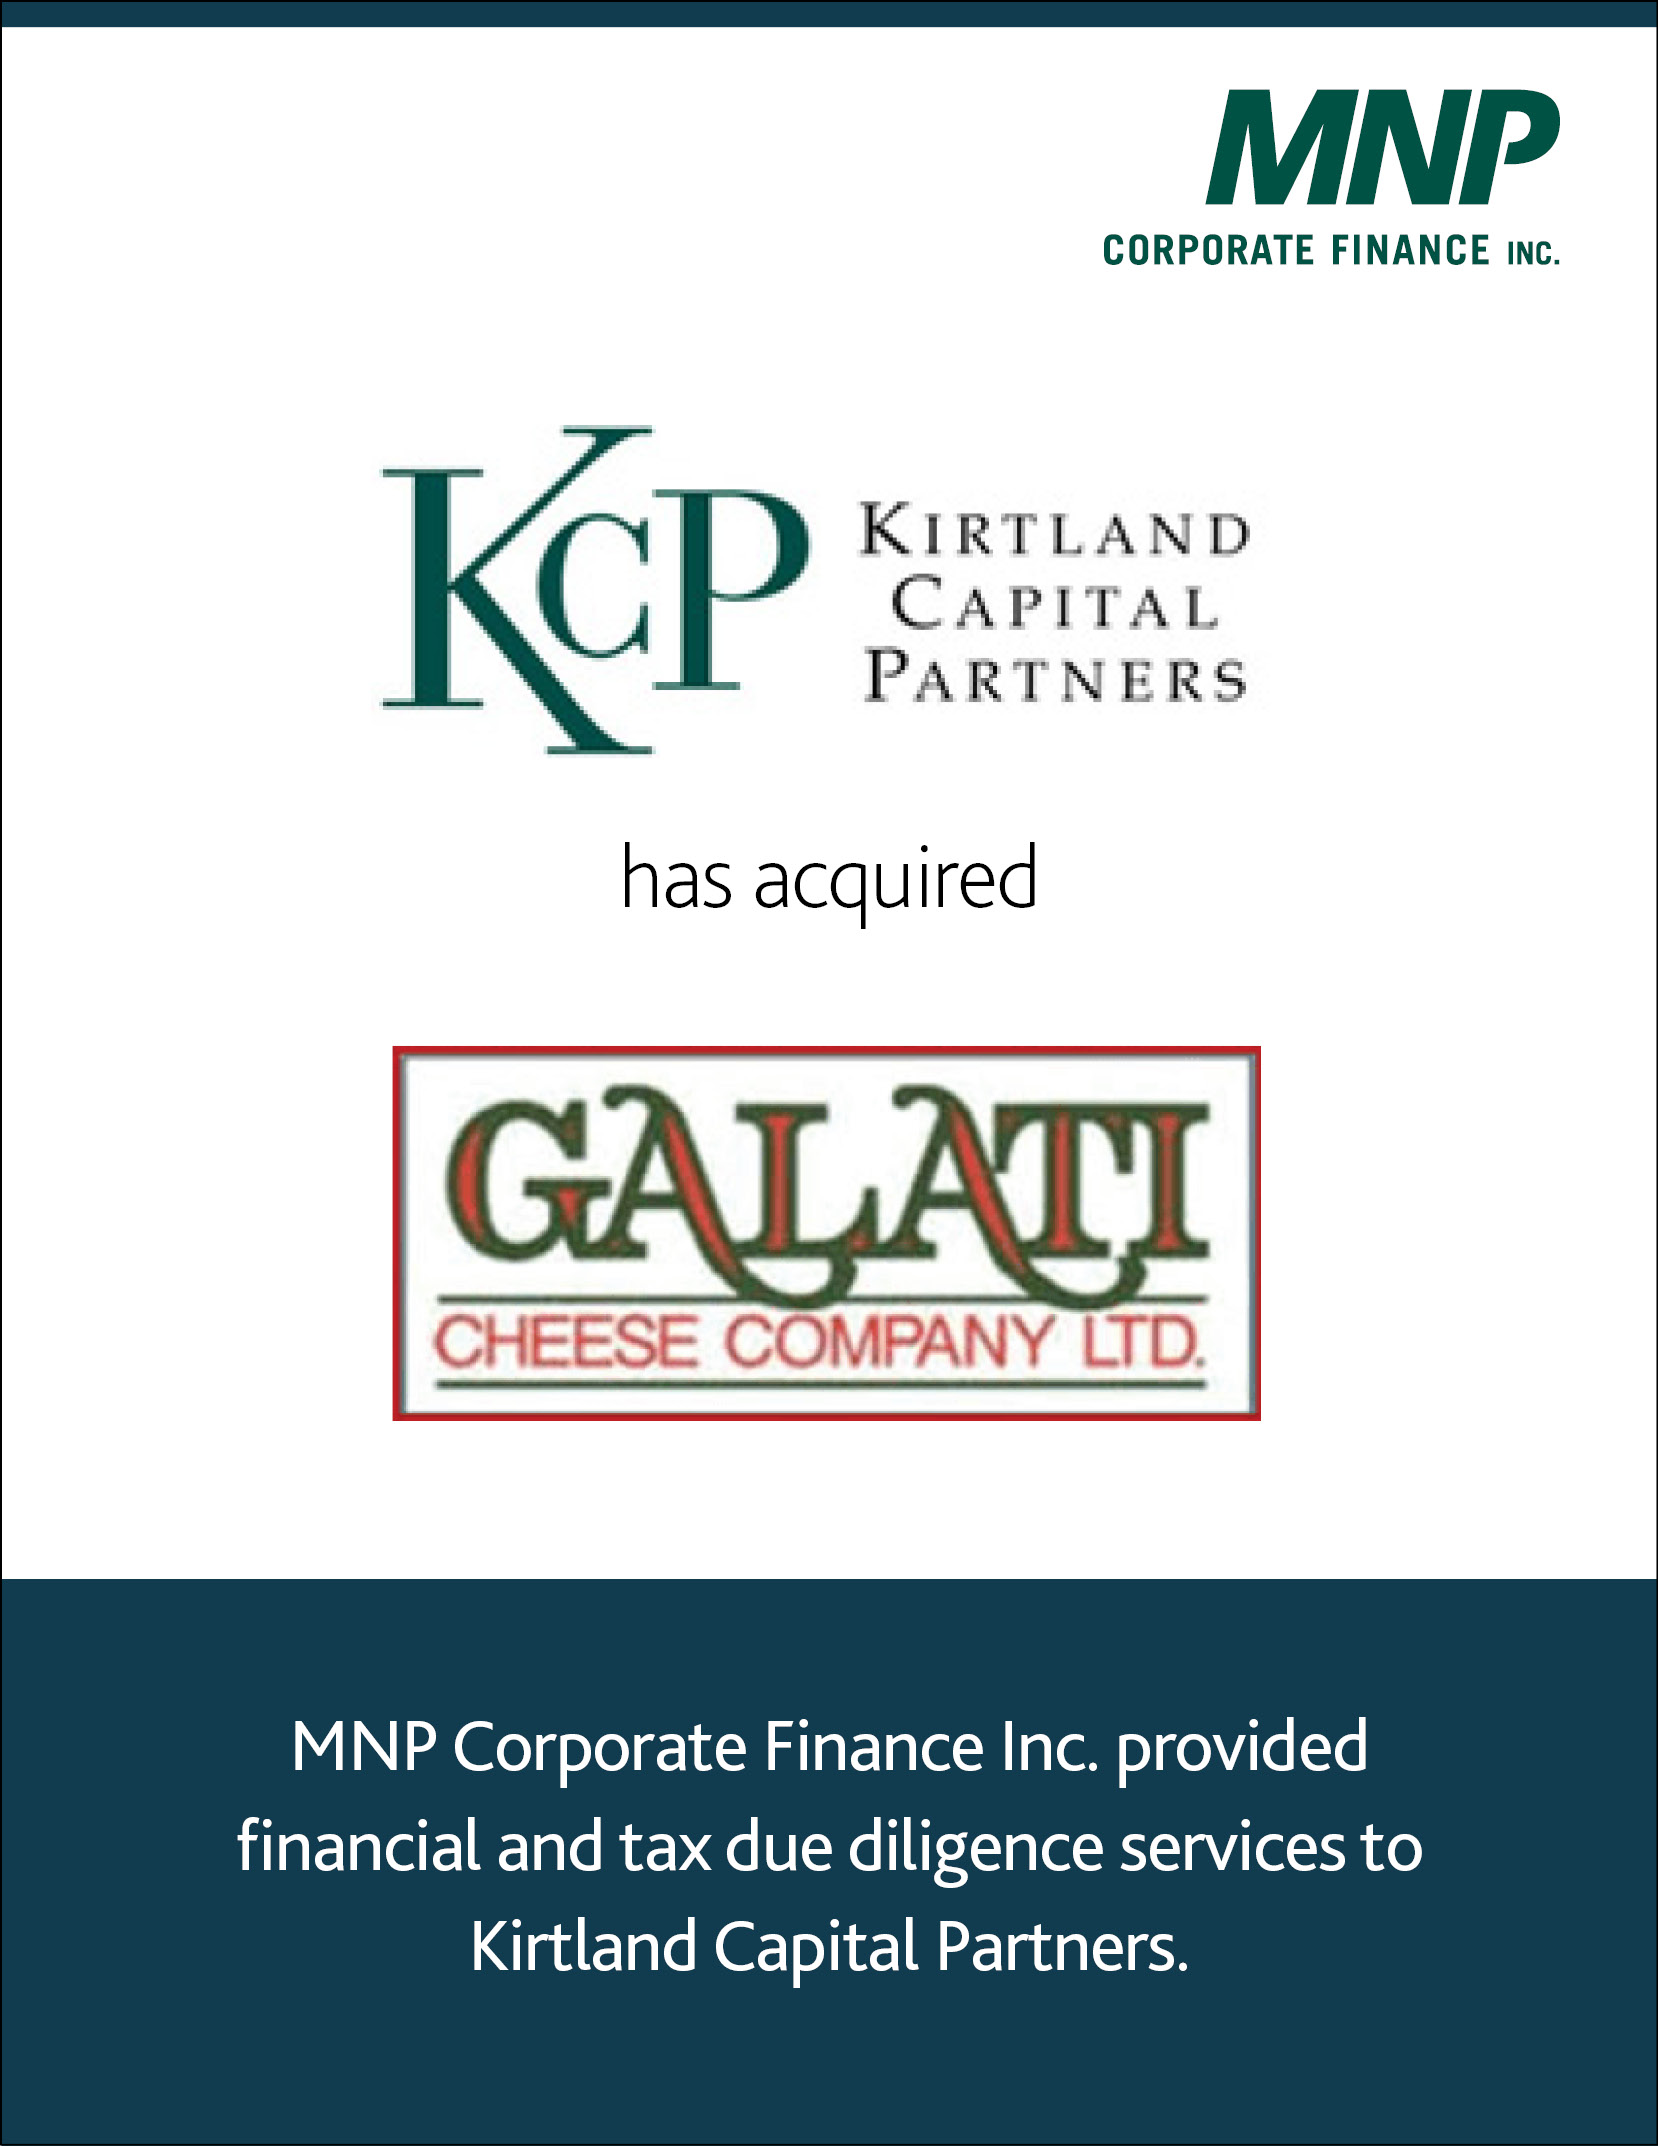 Kirtland Capital Partners Galati Cheese Company Ltd.